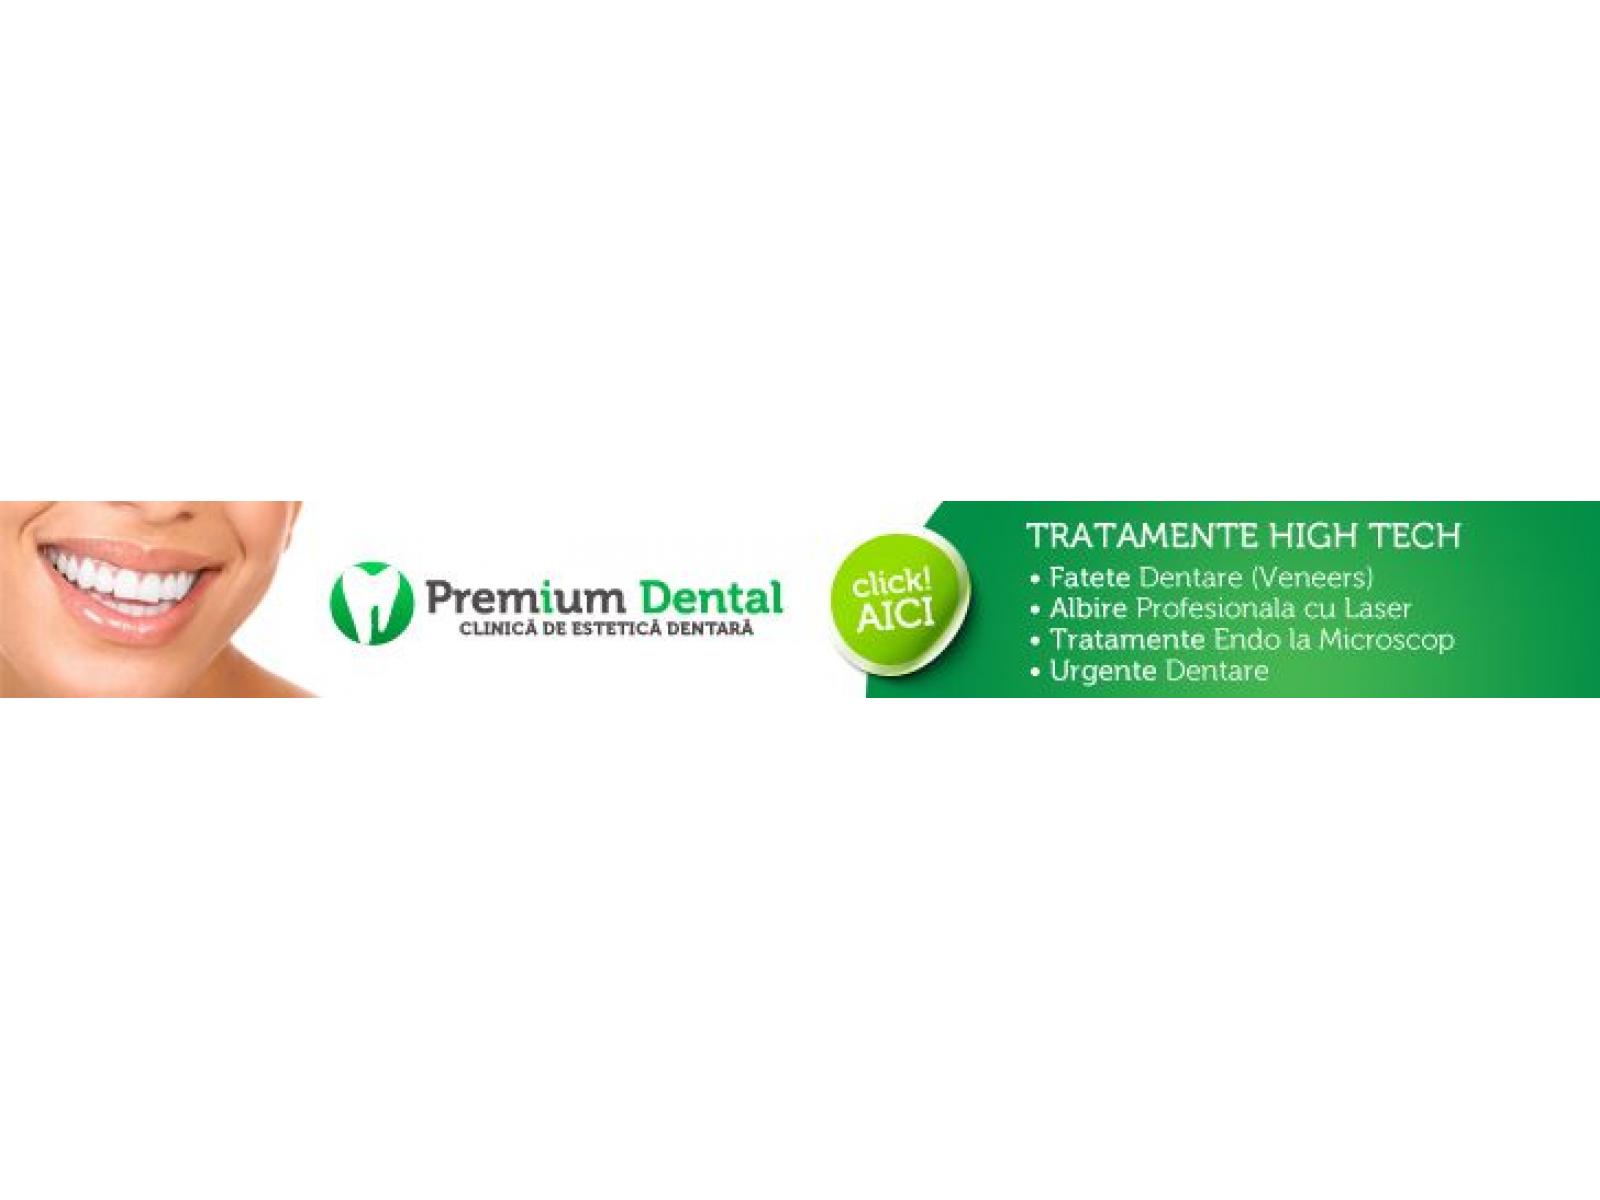 Premium Dental - Clinica de estetica dentara - Banner.jpg